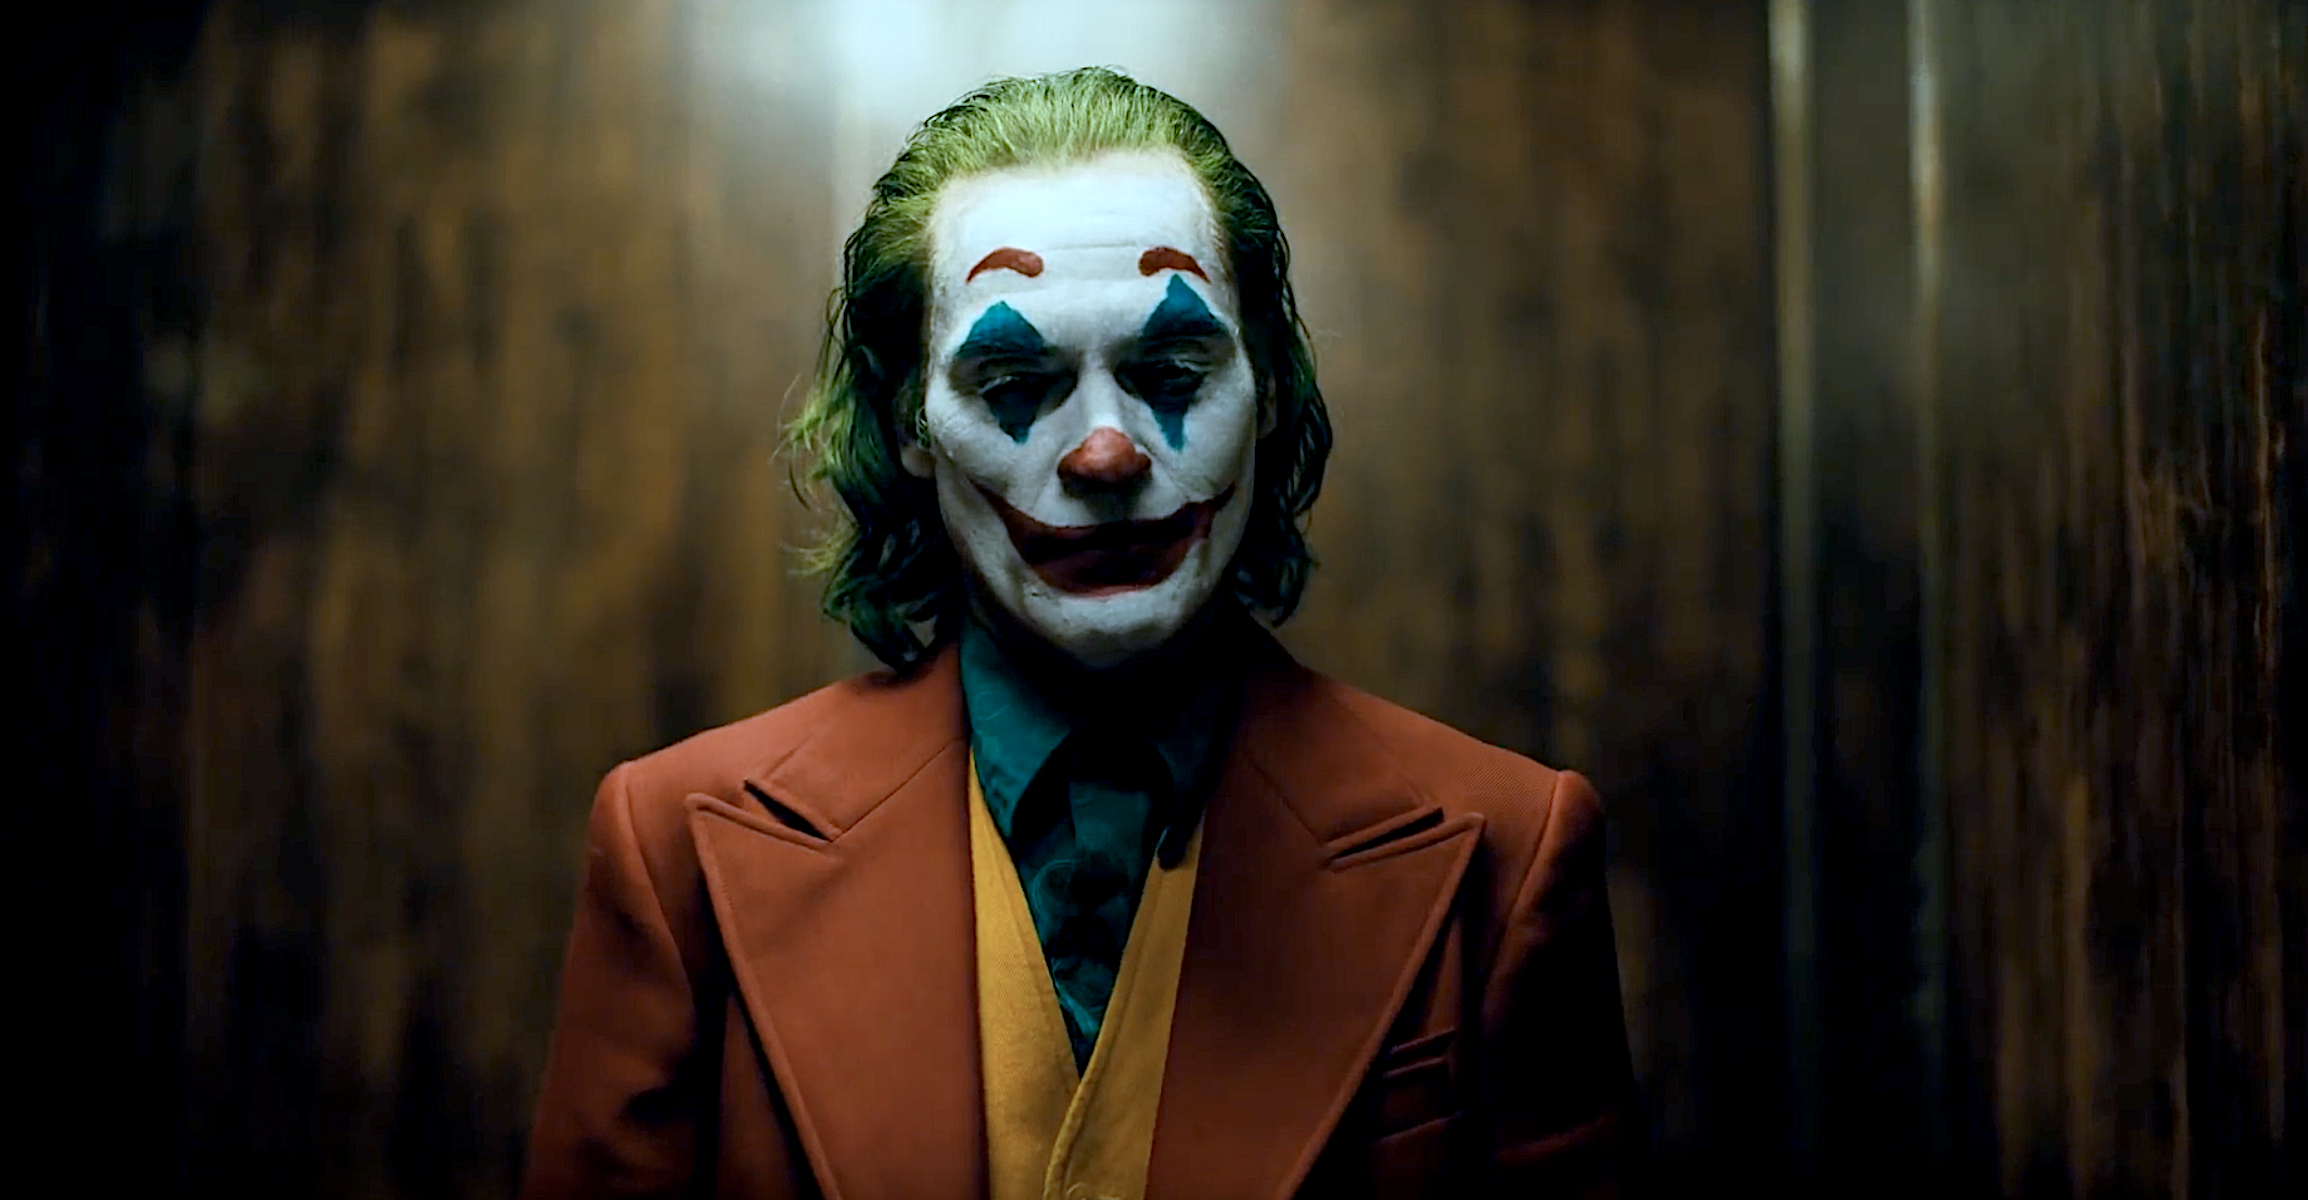 A Sympathetic Joker? WB Drops First Official “Joker” Trailer